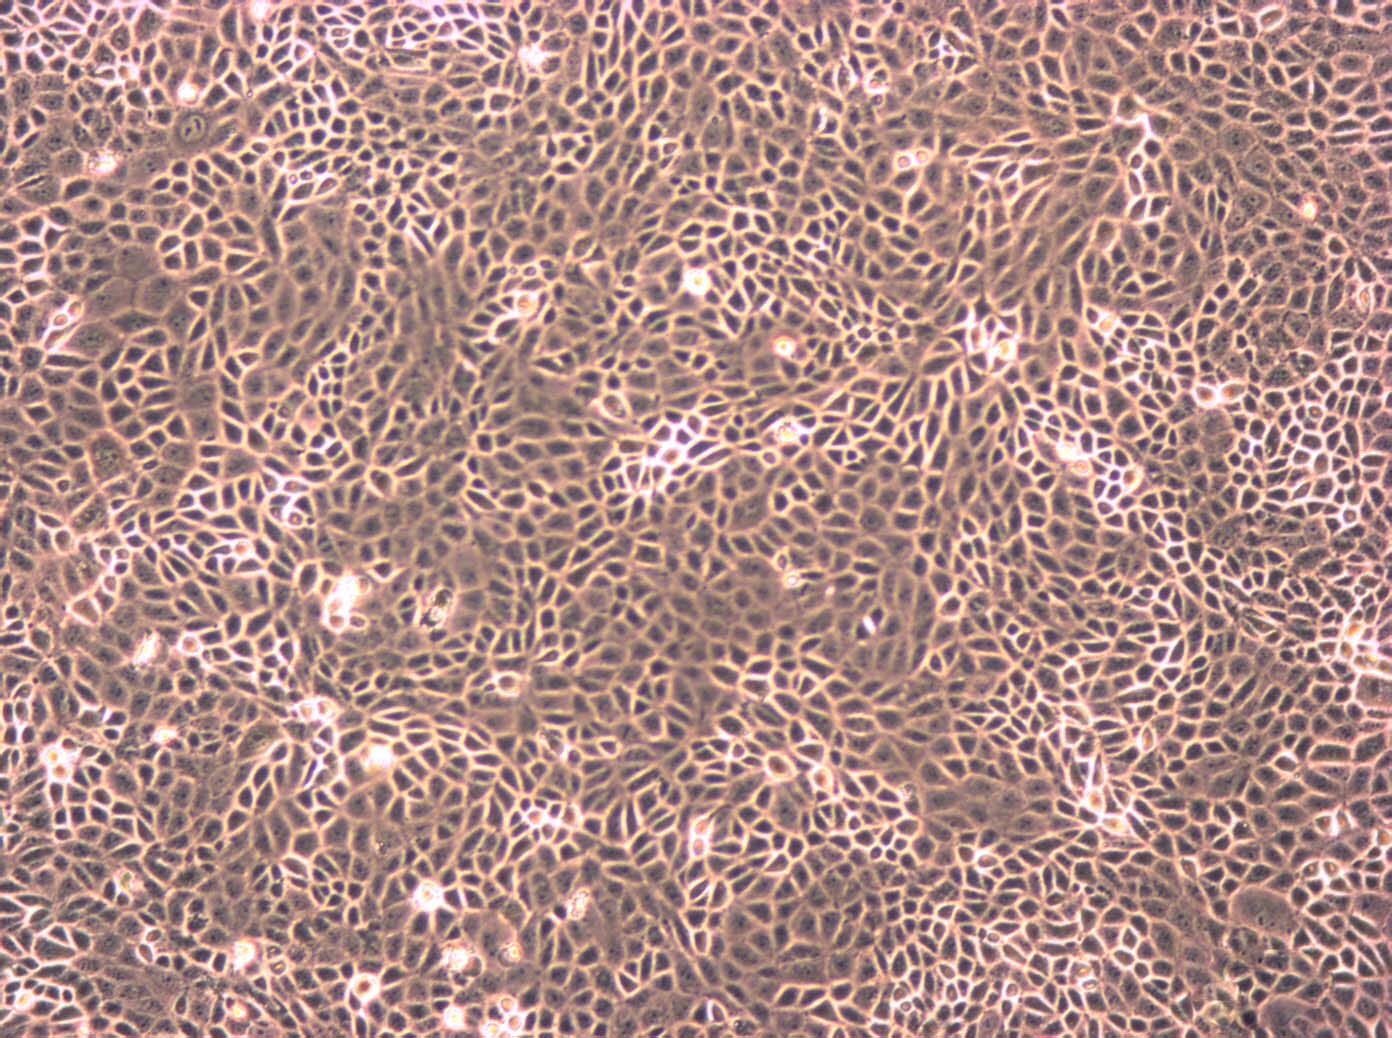 PLA-802 Cell|人恶性横纹肌肉瘤细胞,PLA-802 Cell